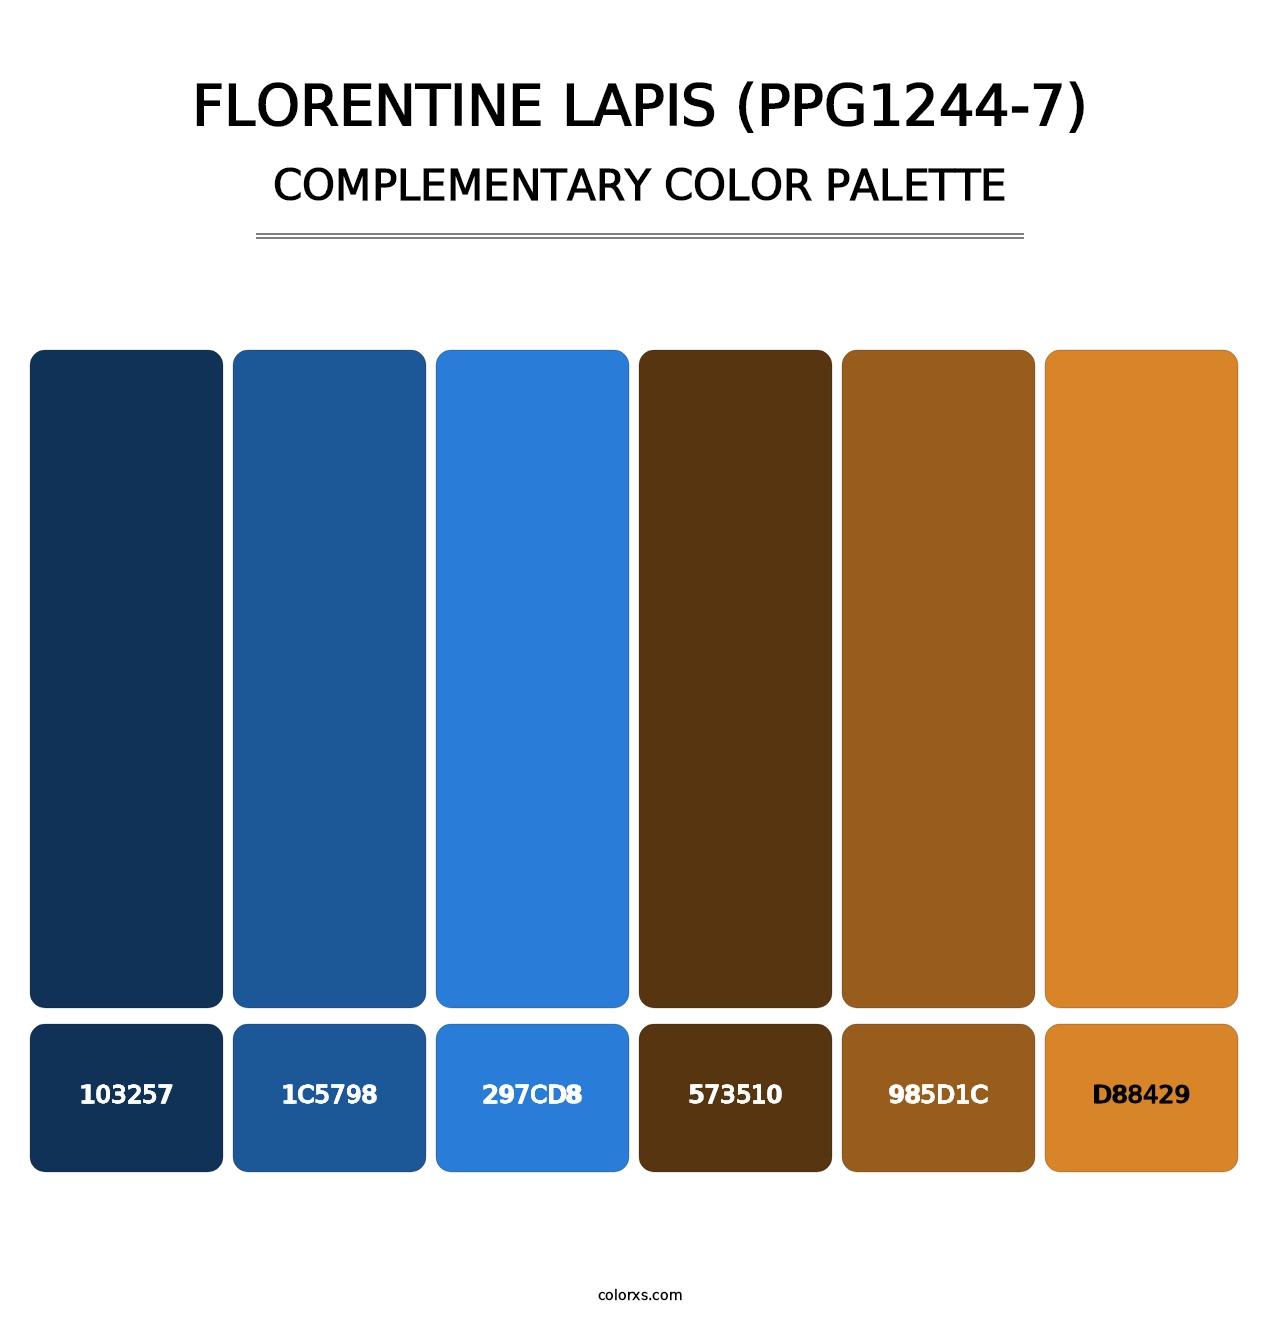 Florentine Lapis (PPG1244-7) - Complementary Color Palette